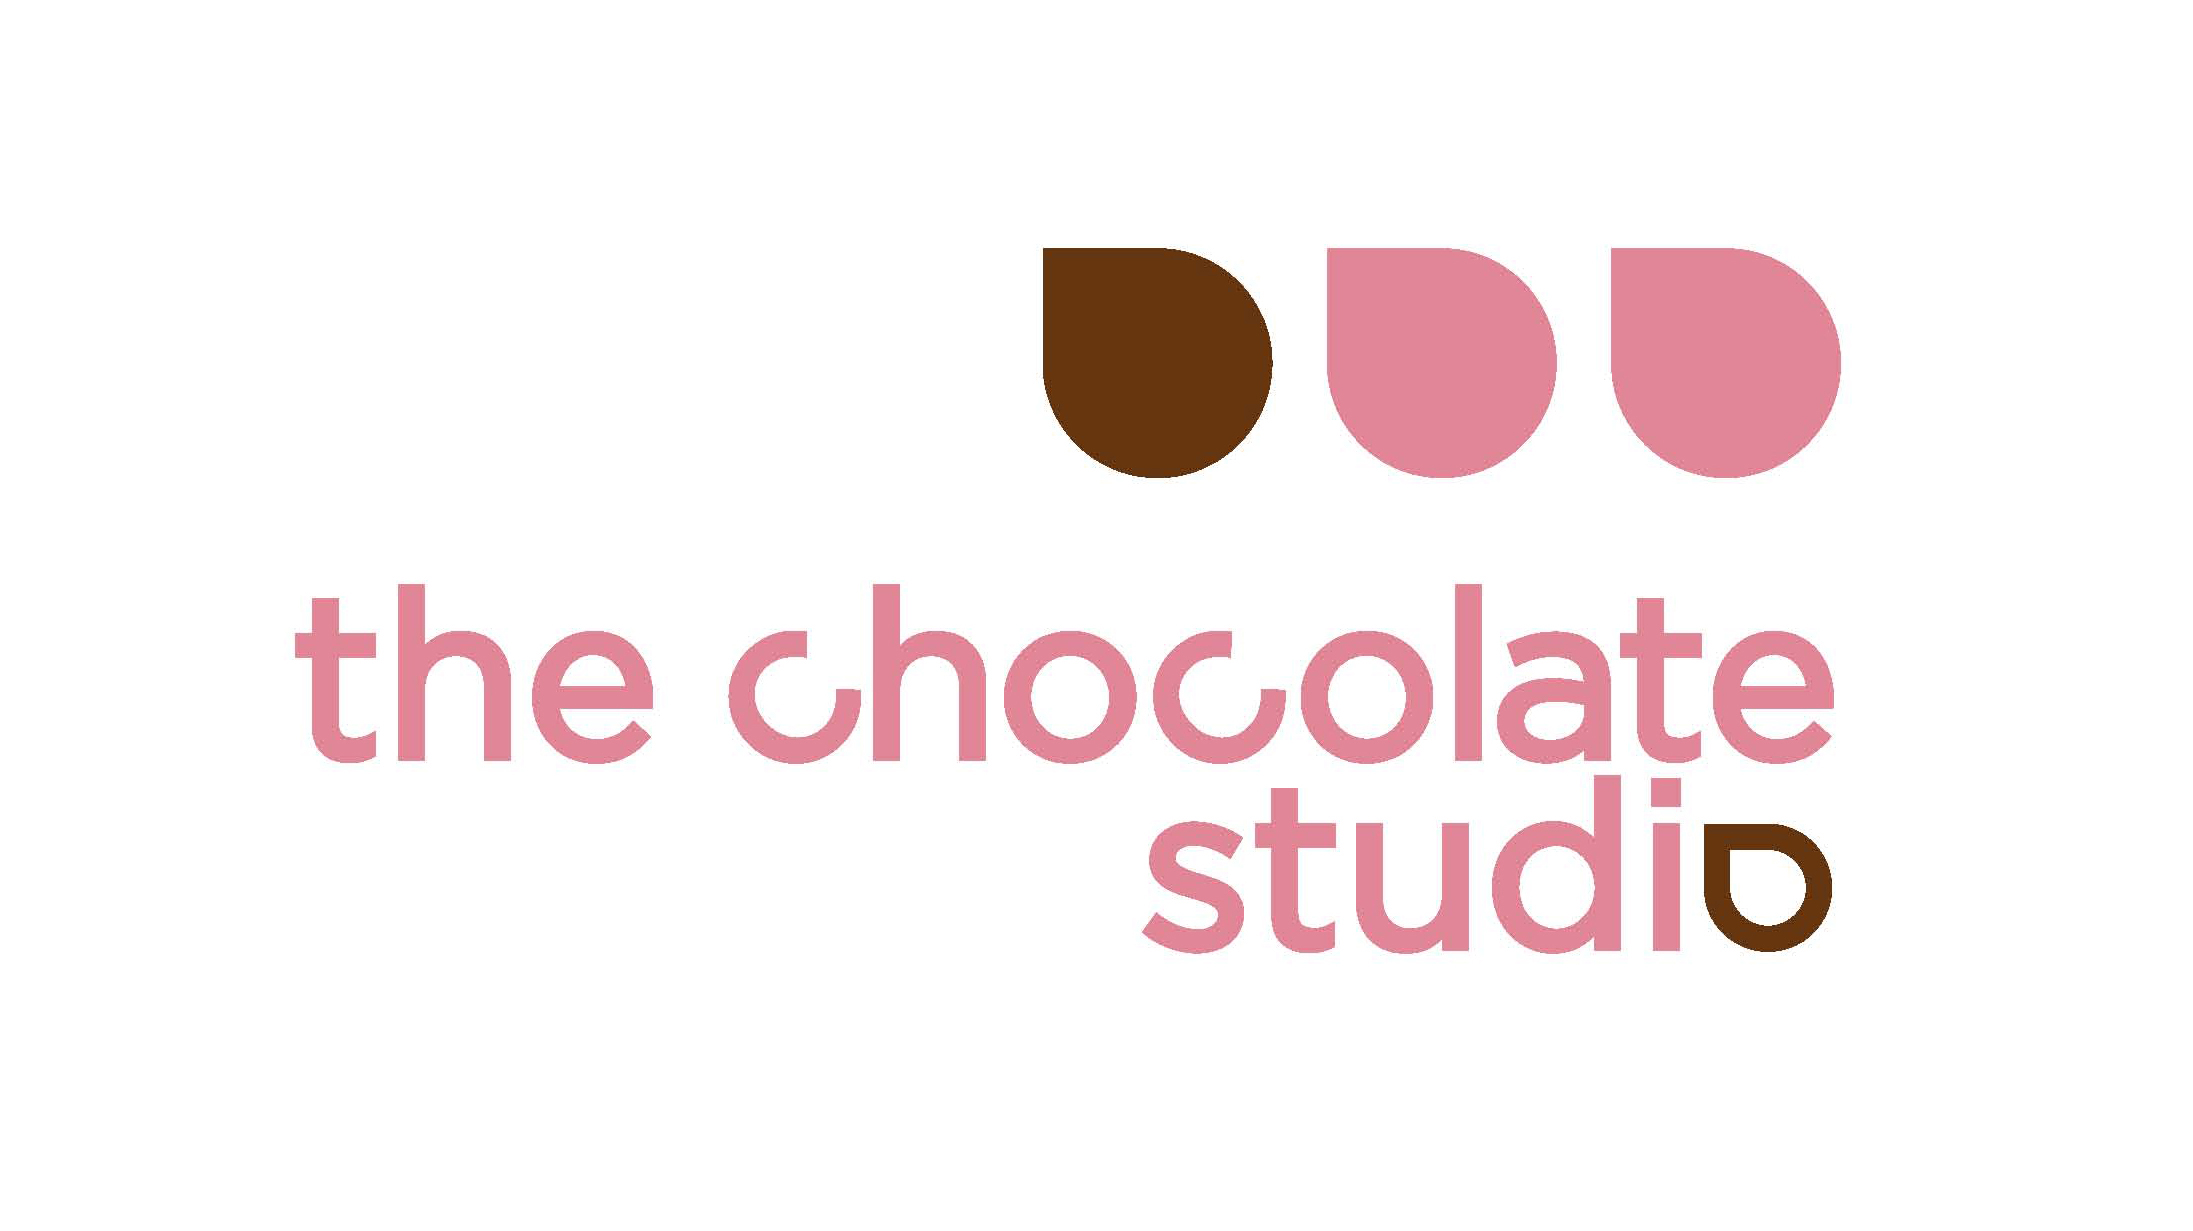 The Chocolate Studio